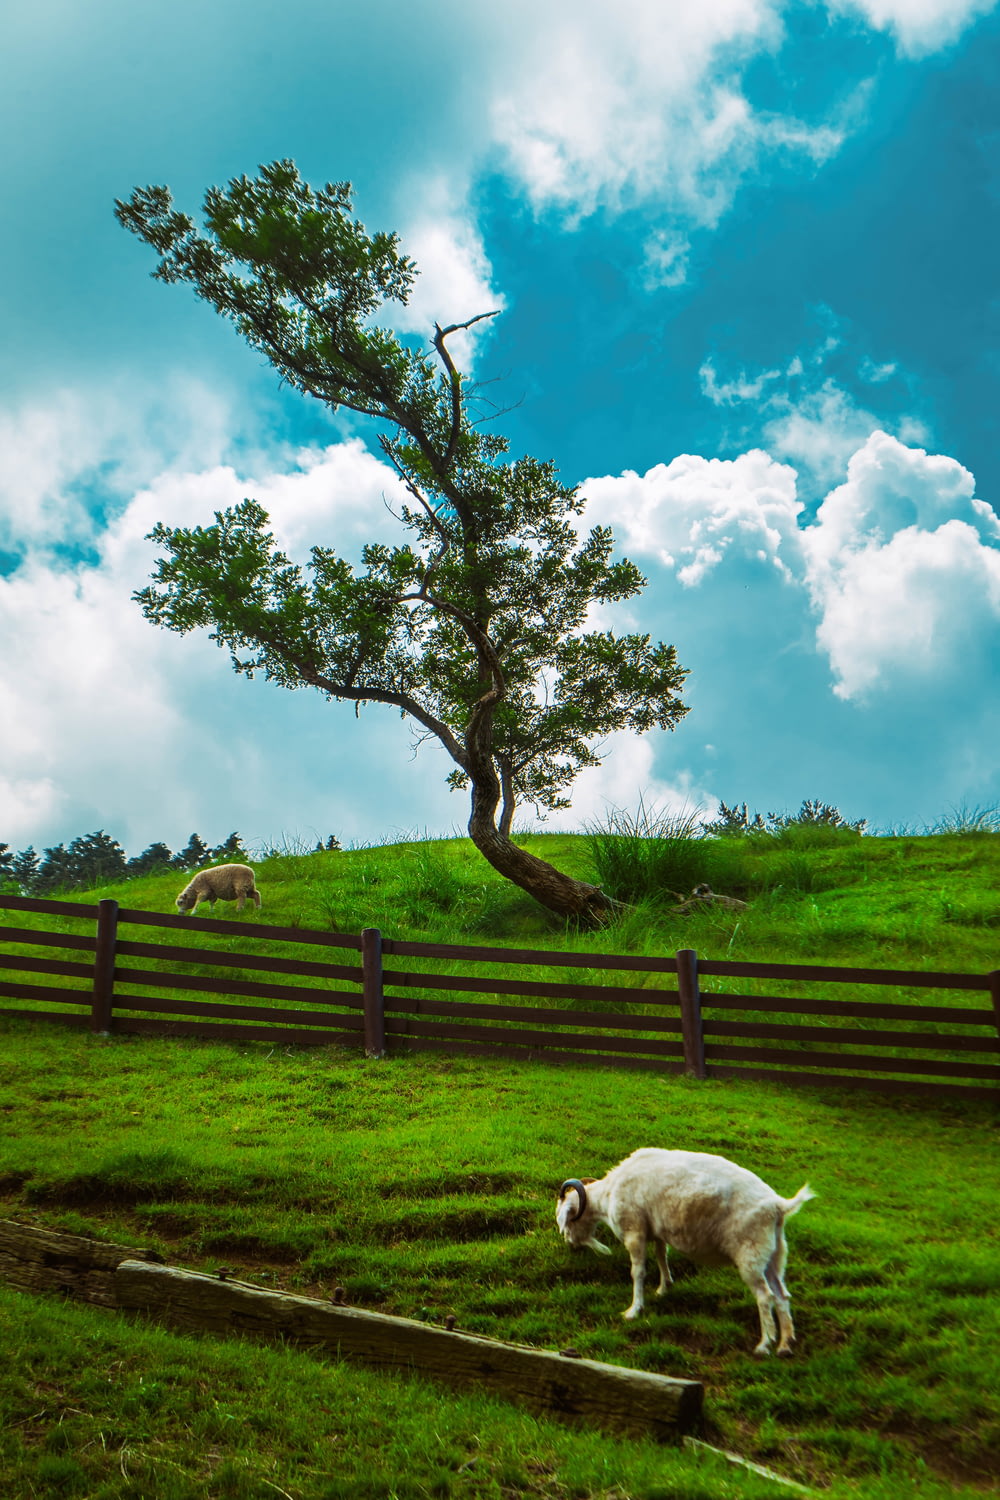 white dog on green grass field under blue sky during daytime